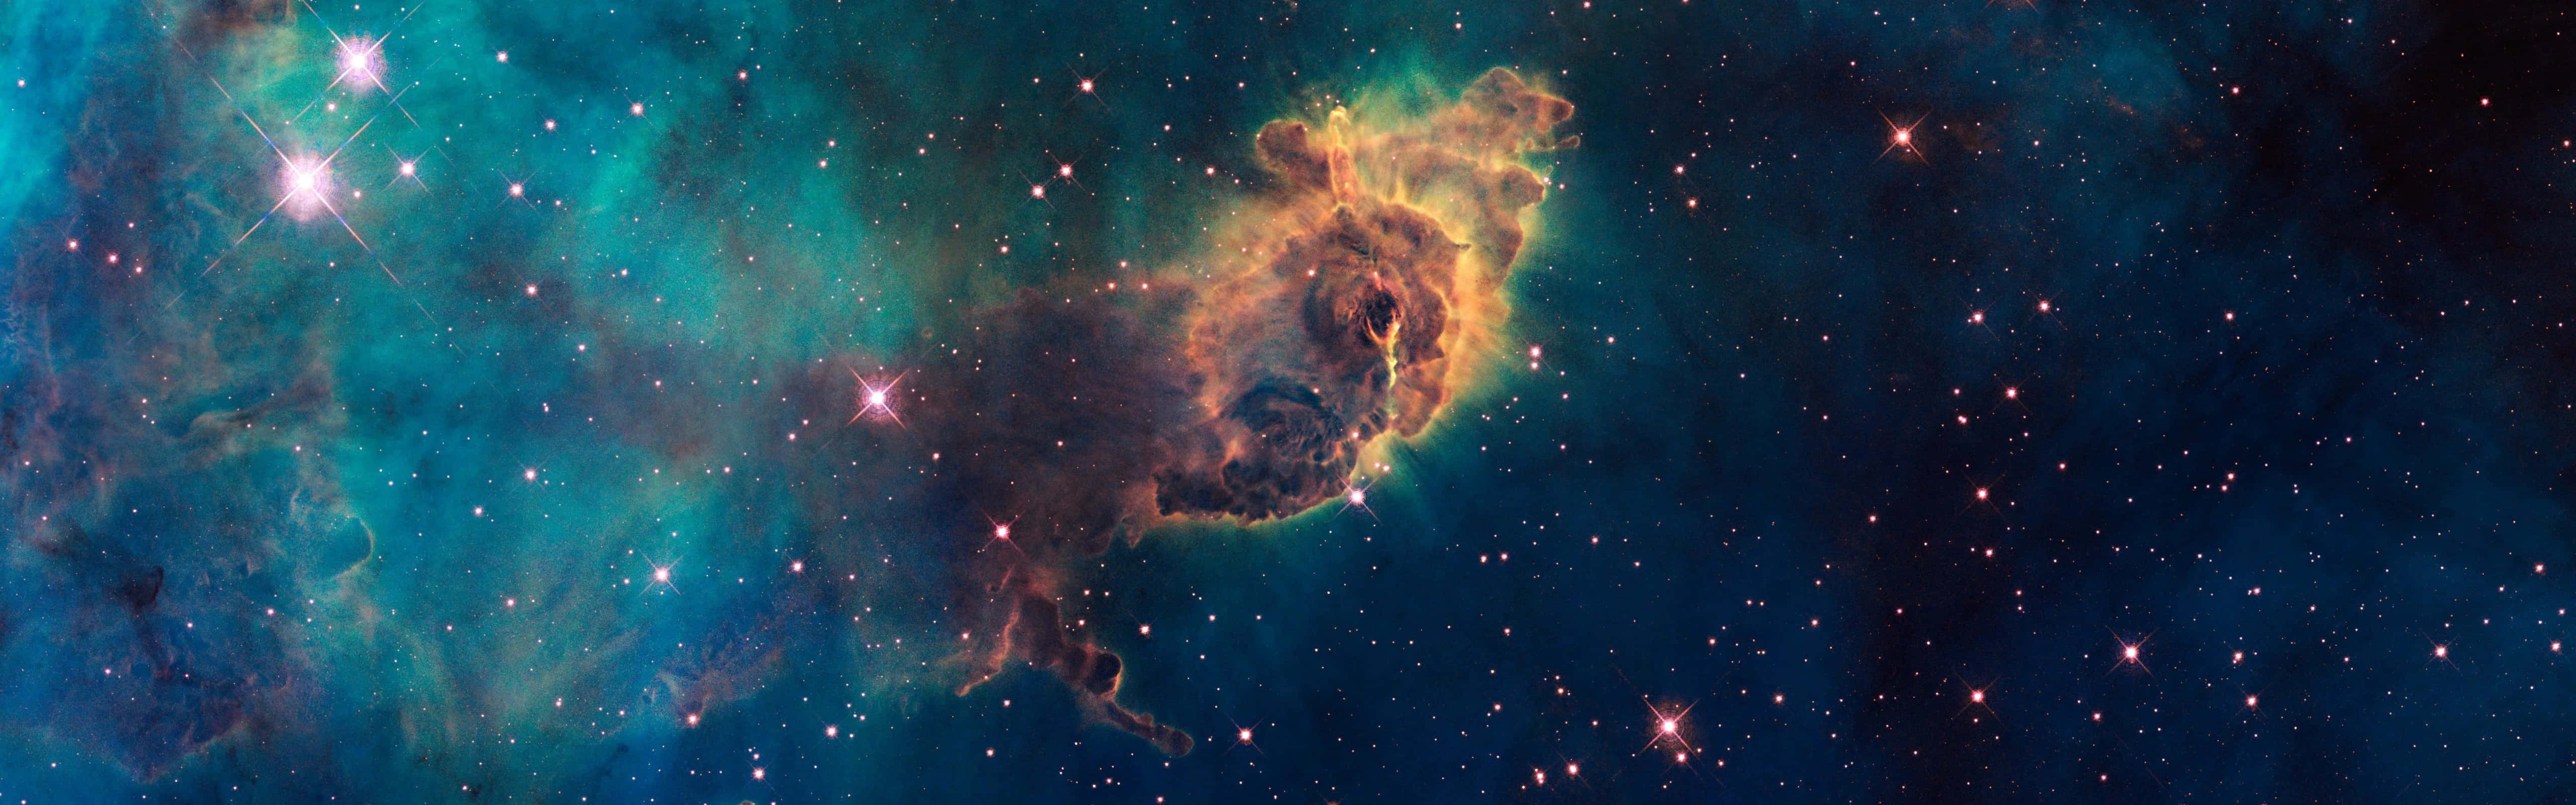 Dubblaskärmar Rymdfordon Carina-nebulosan. Wallpaper